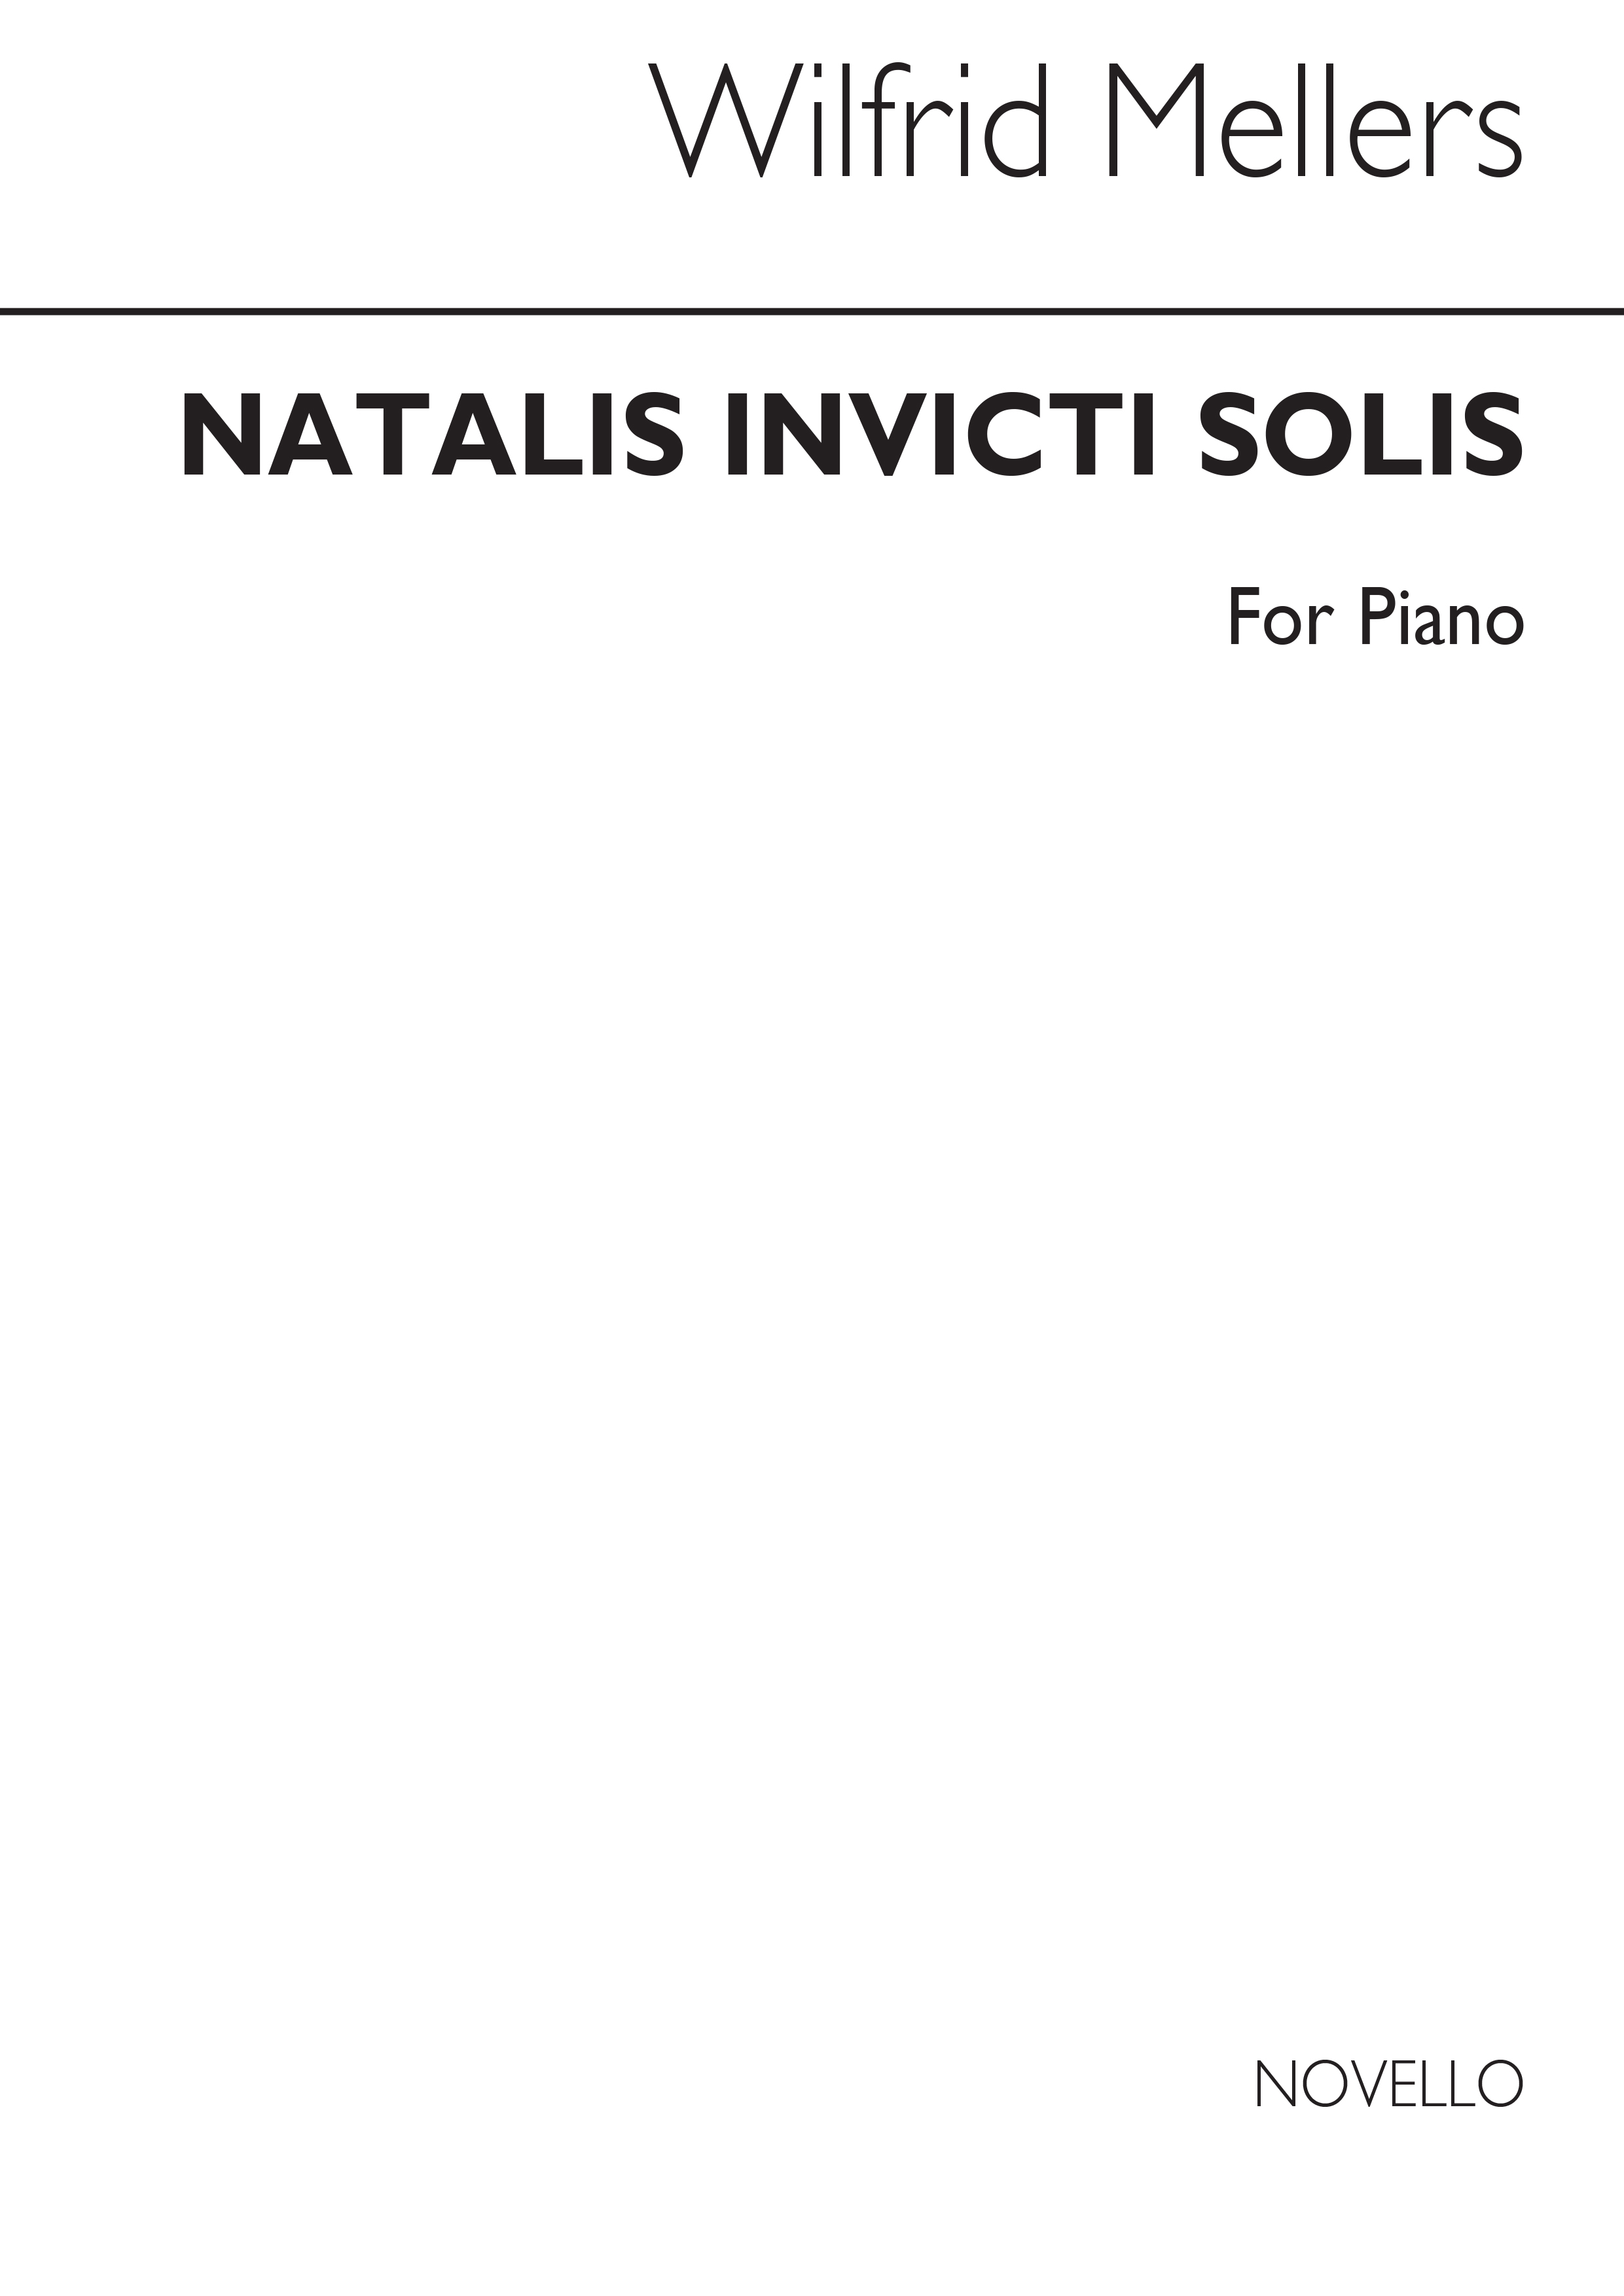 Mellers: Natalis Invicti Solis for Piano